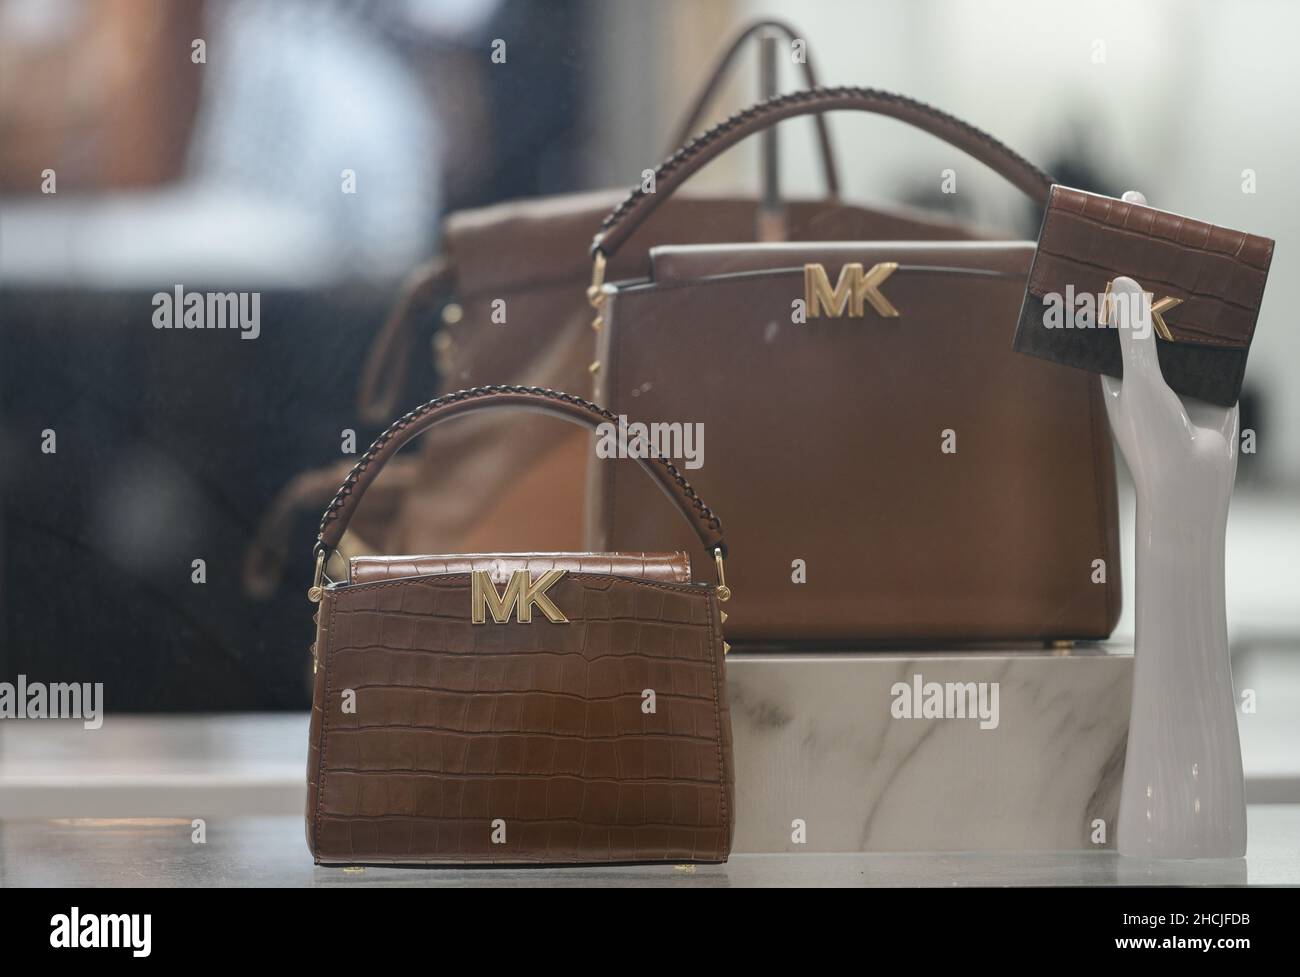 Michael kors handbags fotografías e imágenes de alta resolución - Alamy